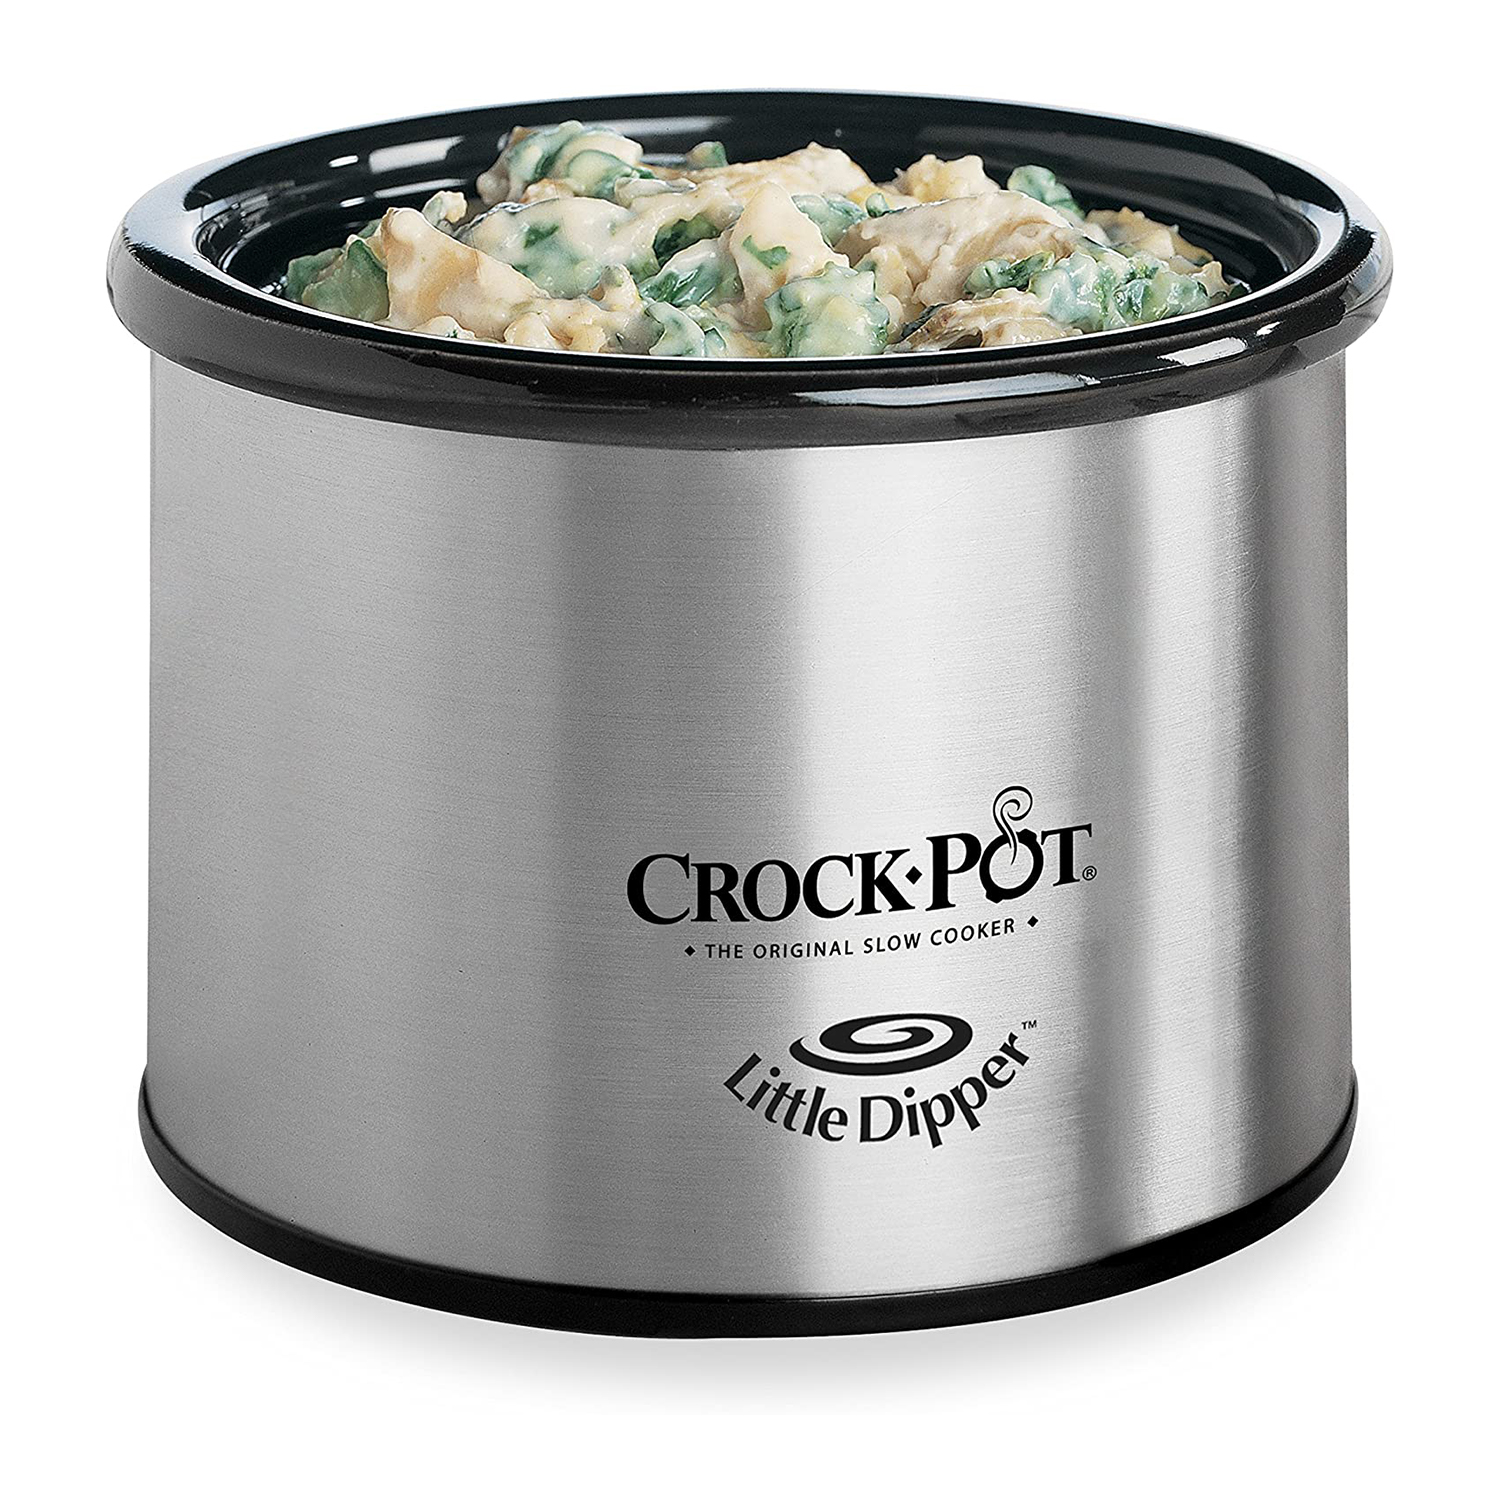 Crock-Pot Little Dipper Food Warmer, Silver - image 2 of 3